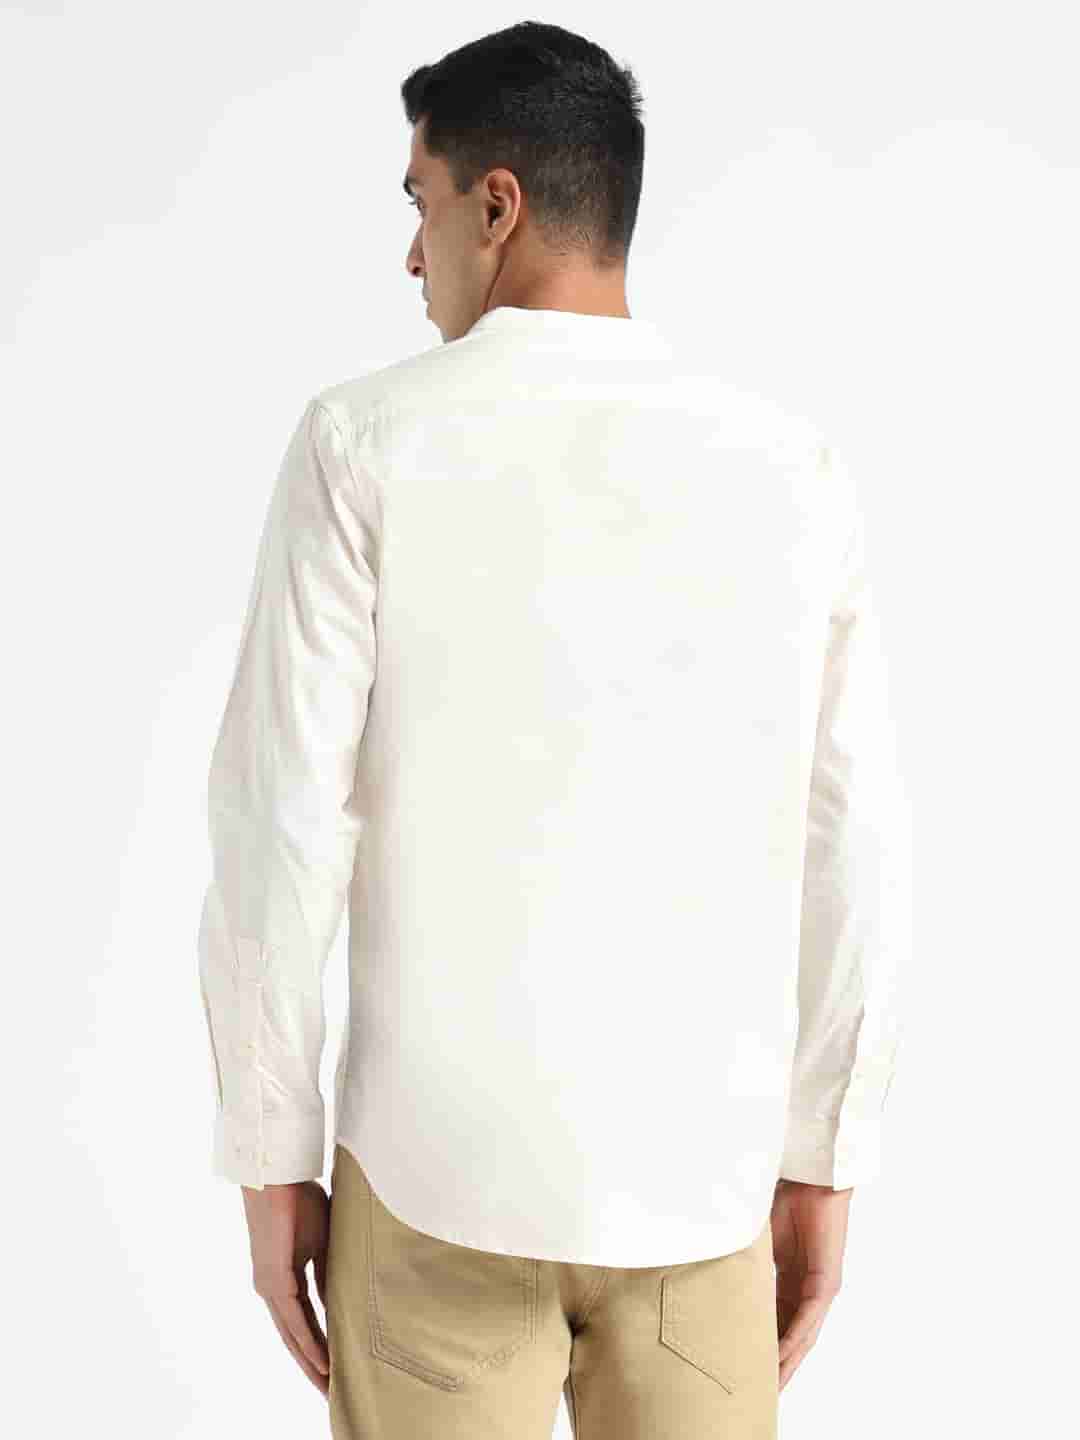 Organic Cotton & Naturally Dyed Mens Round Neck Light Cream Shirt by Livbio